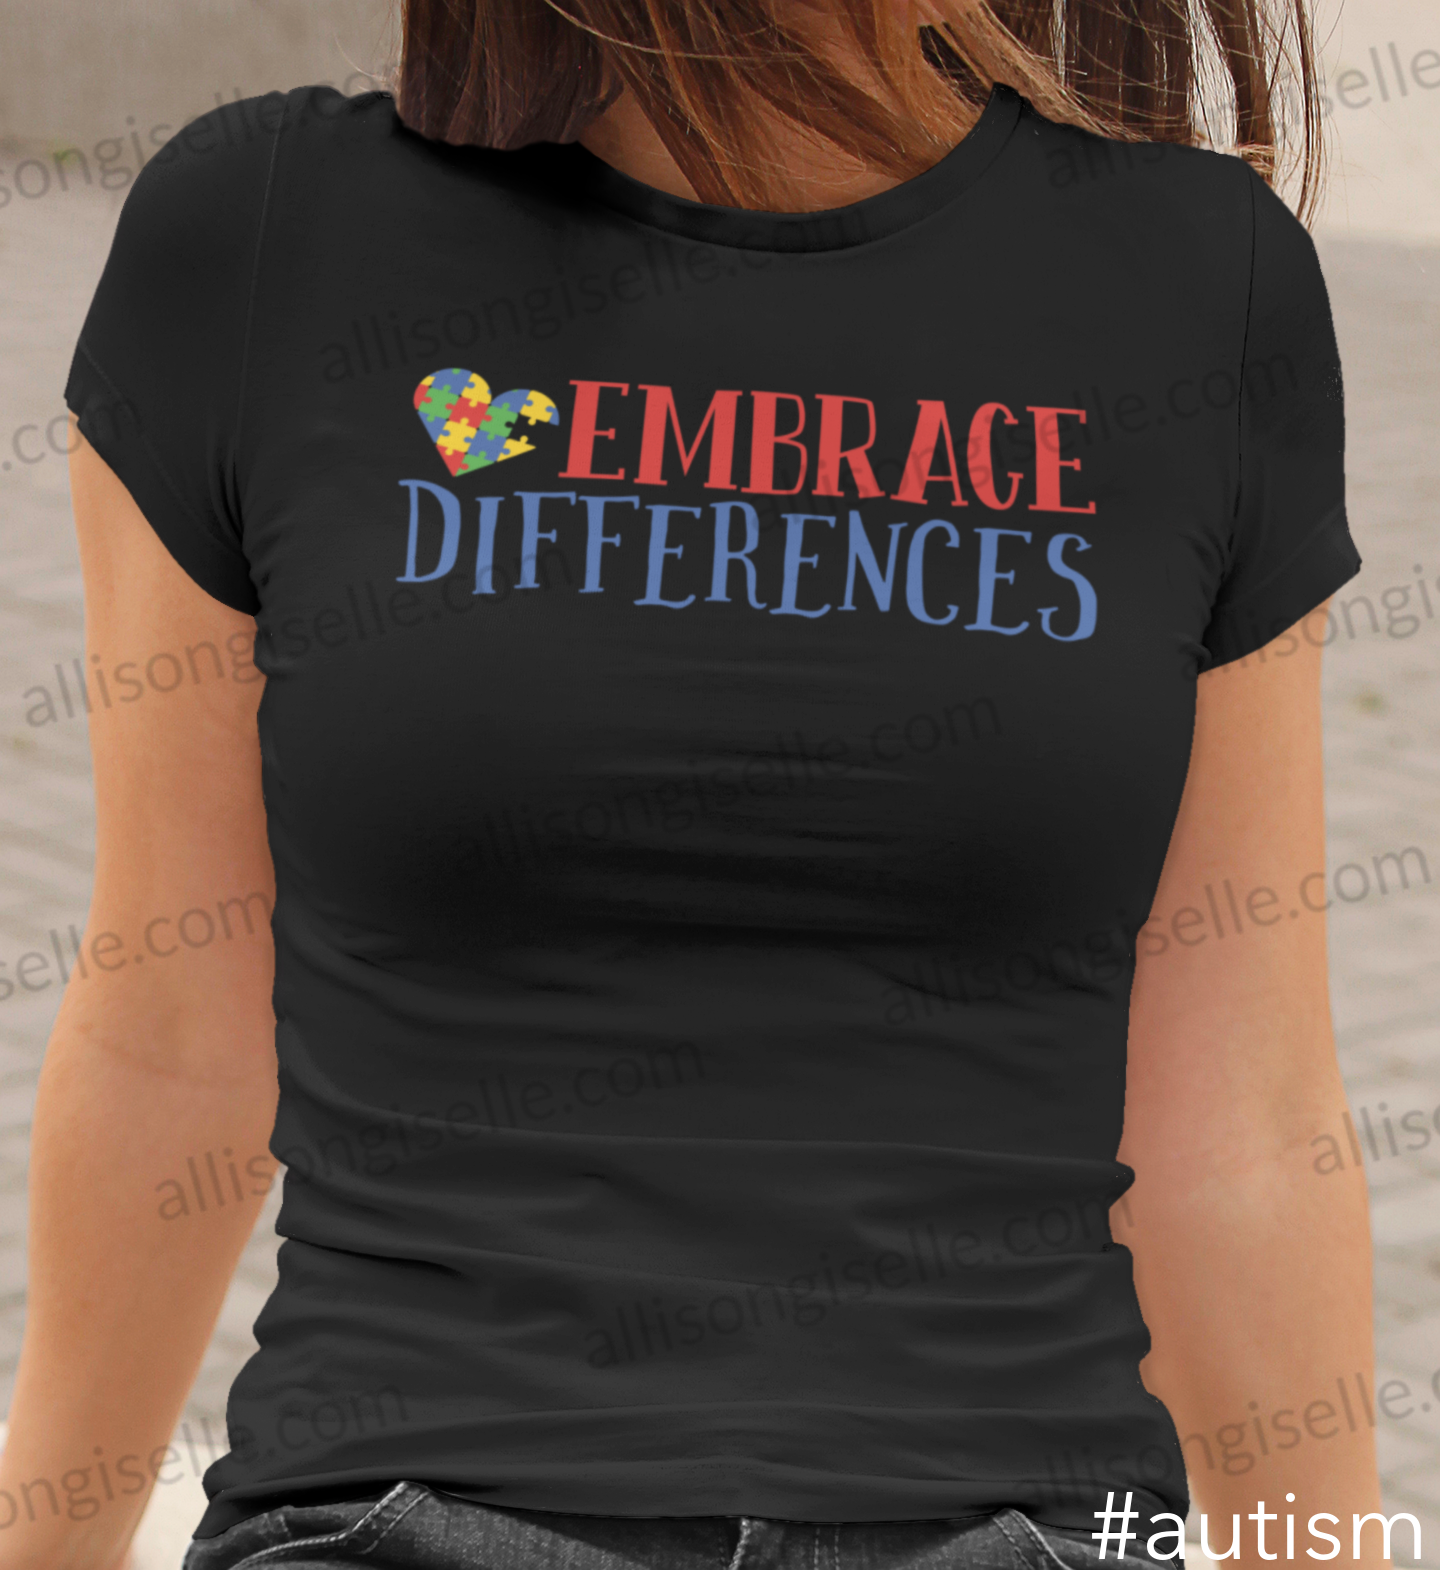 Embrace Differences Autism Shirt, Adult Autism Awareness shirts, Autism Shirt Adult, Adult Autism Shirt, Autism Awareness Shirt Adult